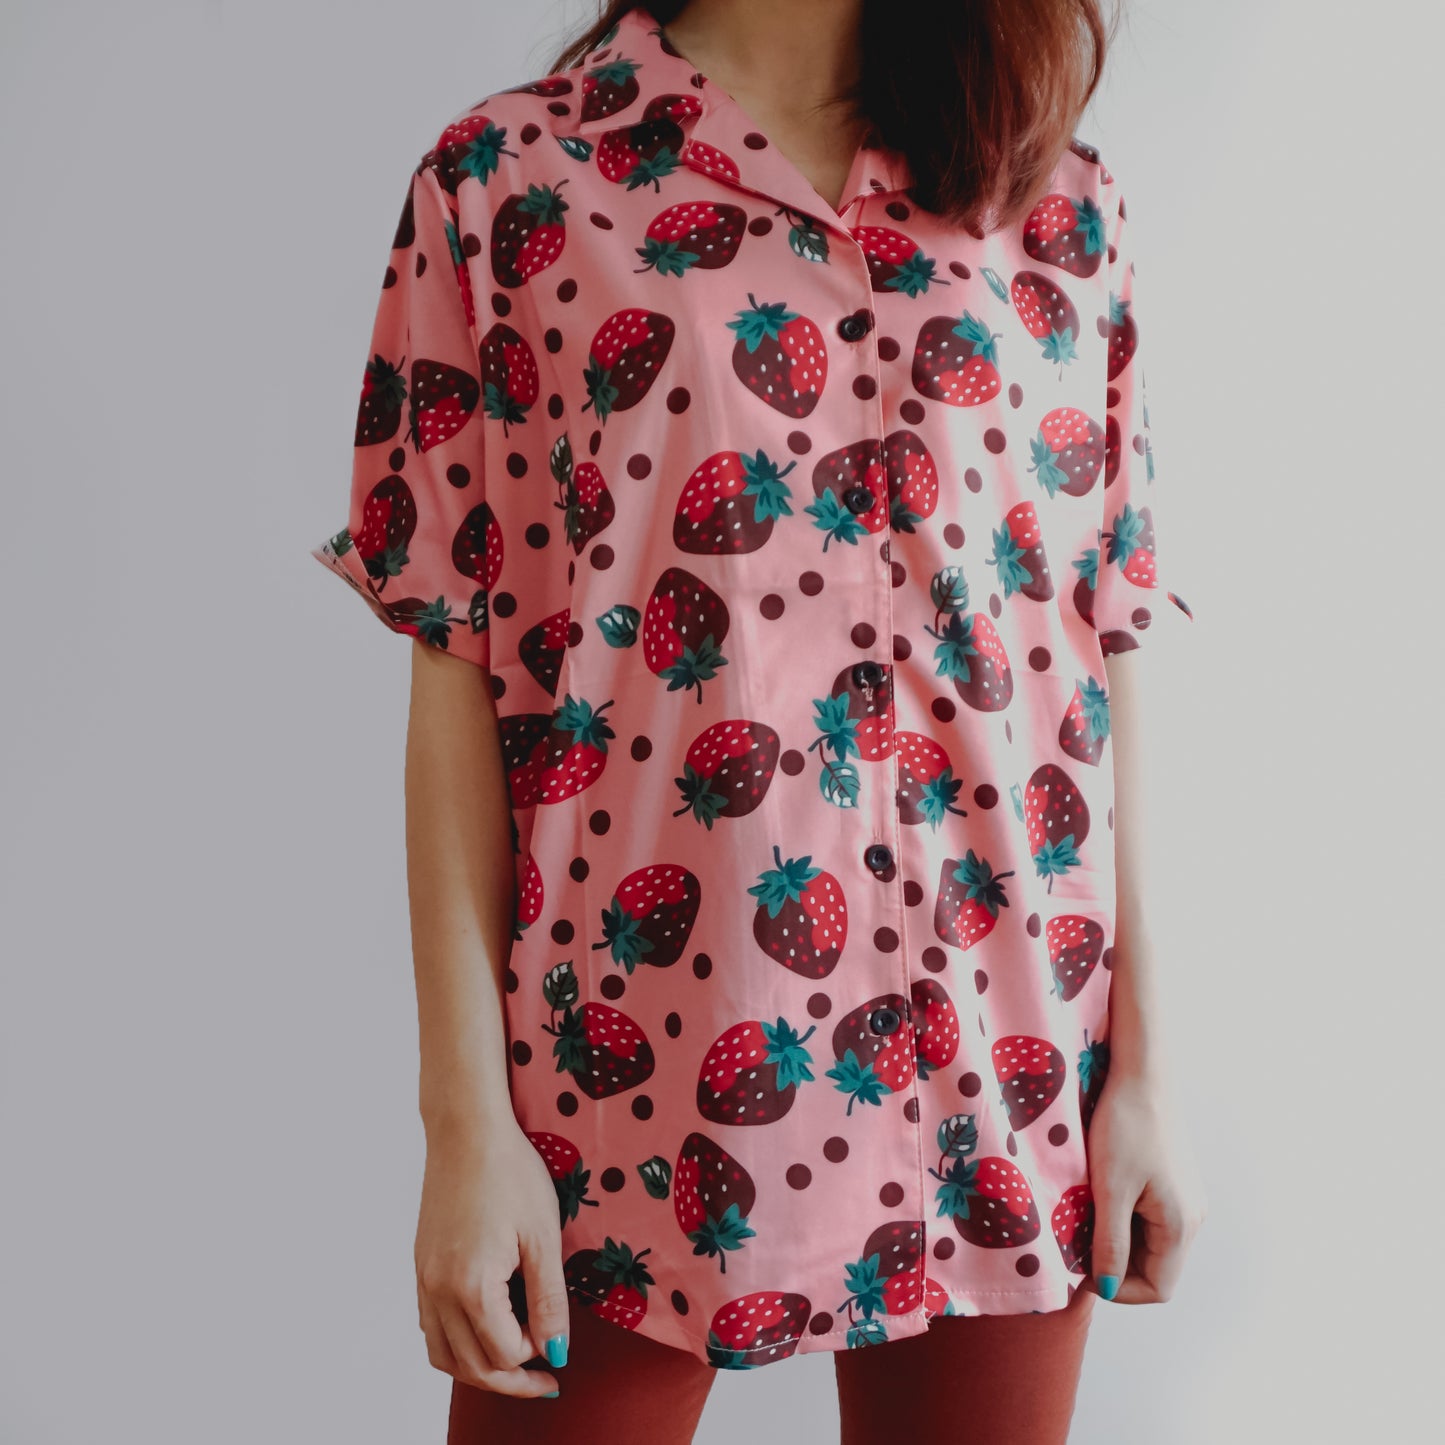 Strawberry Button Up Shirt (Pink)